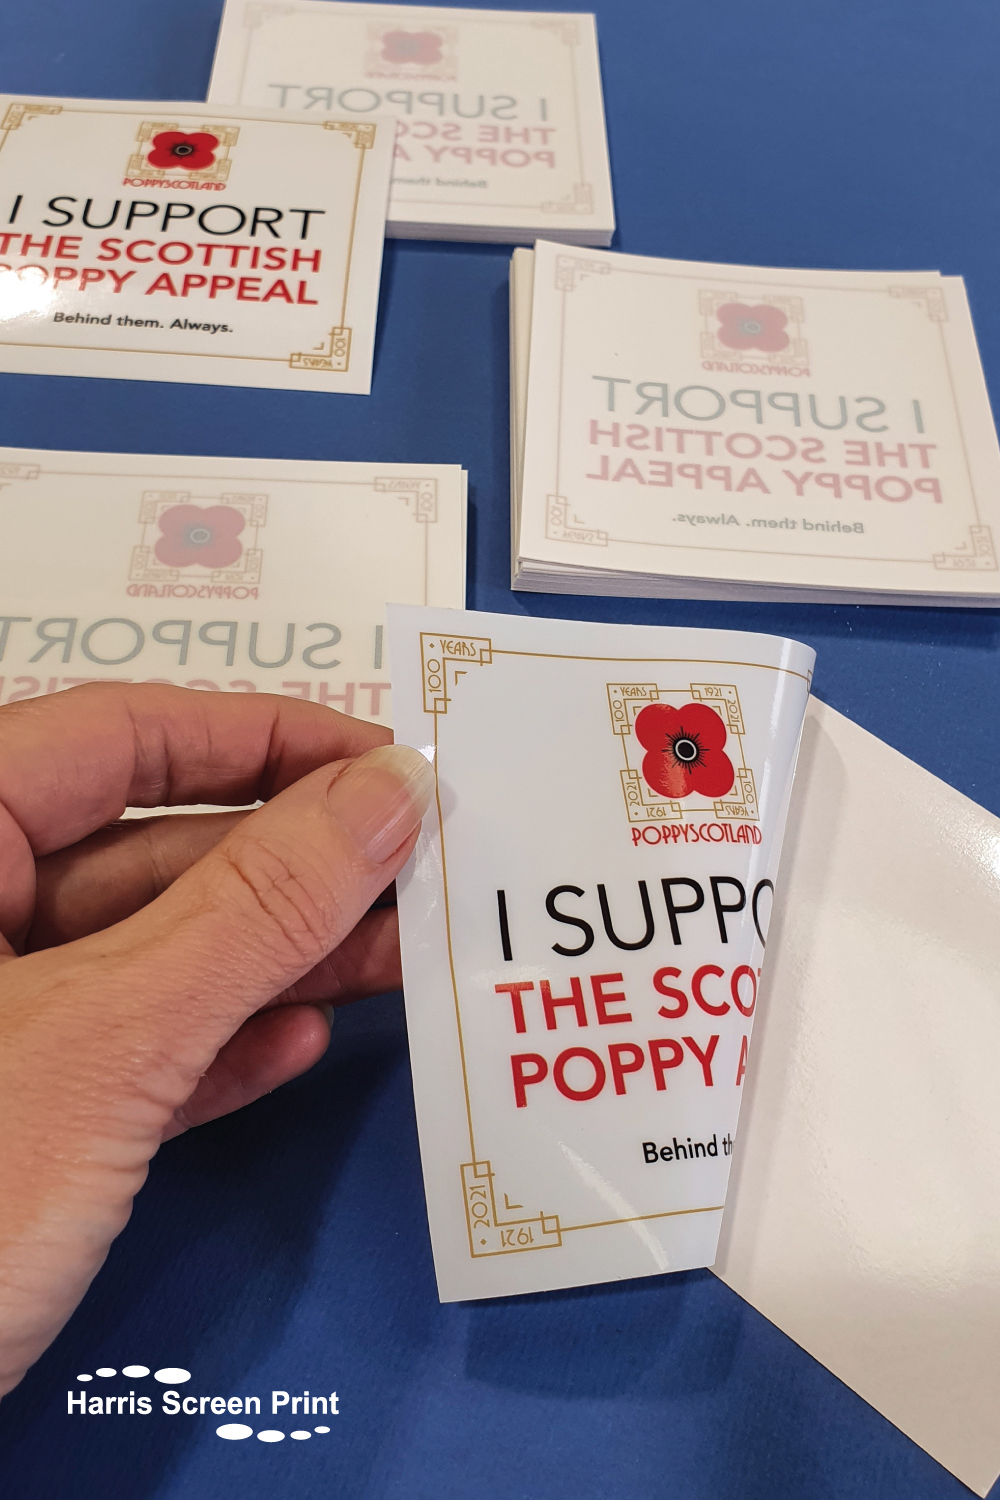 Scottish Poppy Appeal window stickers printed